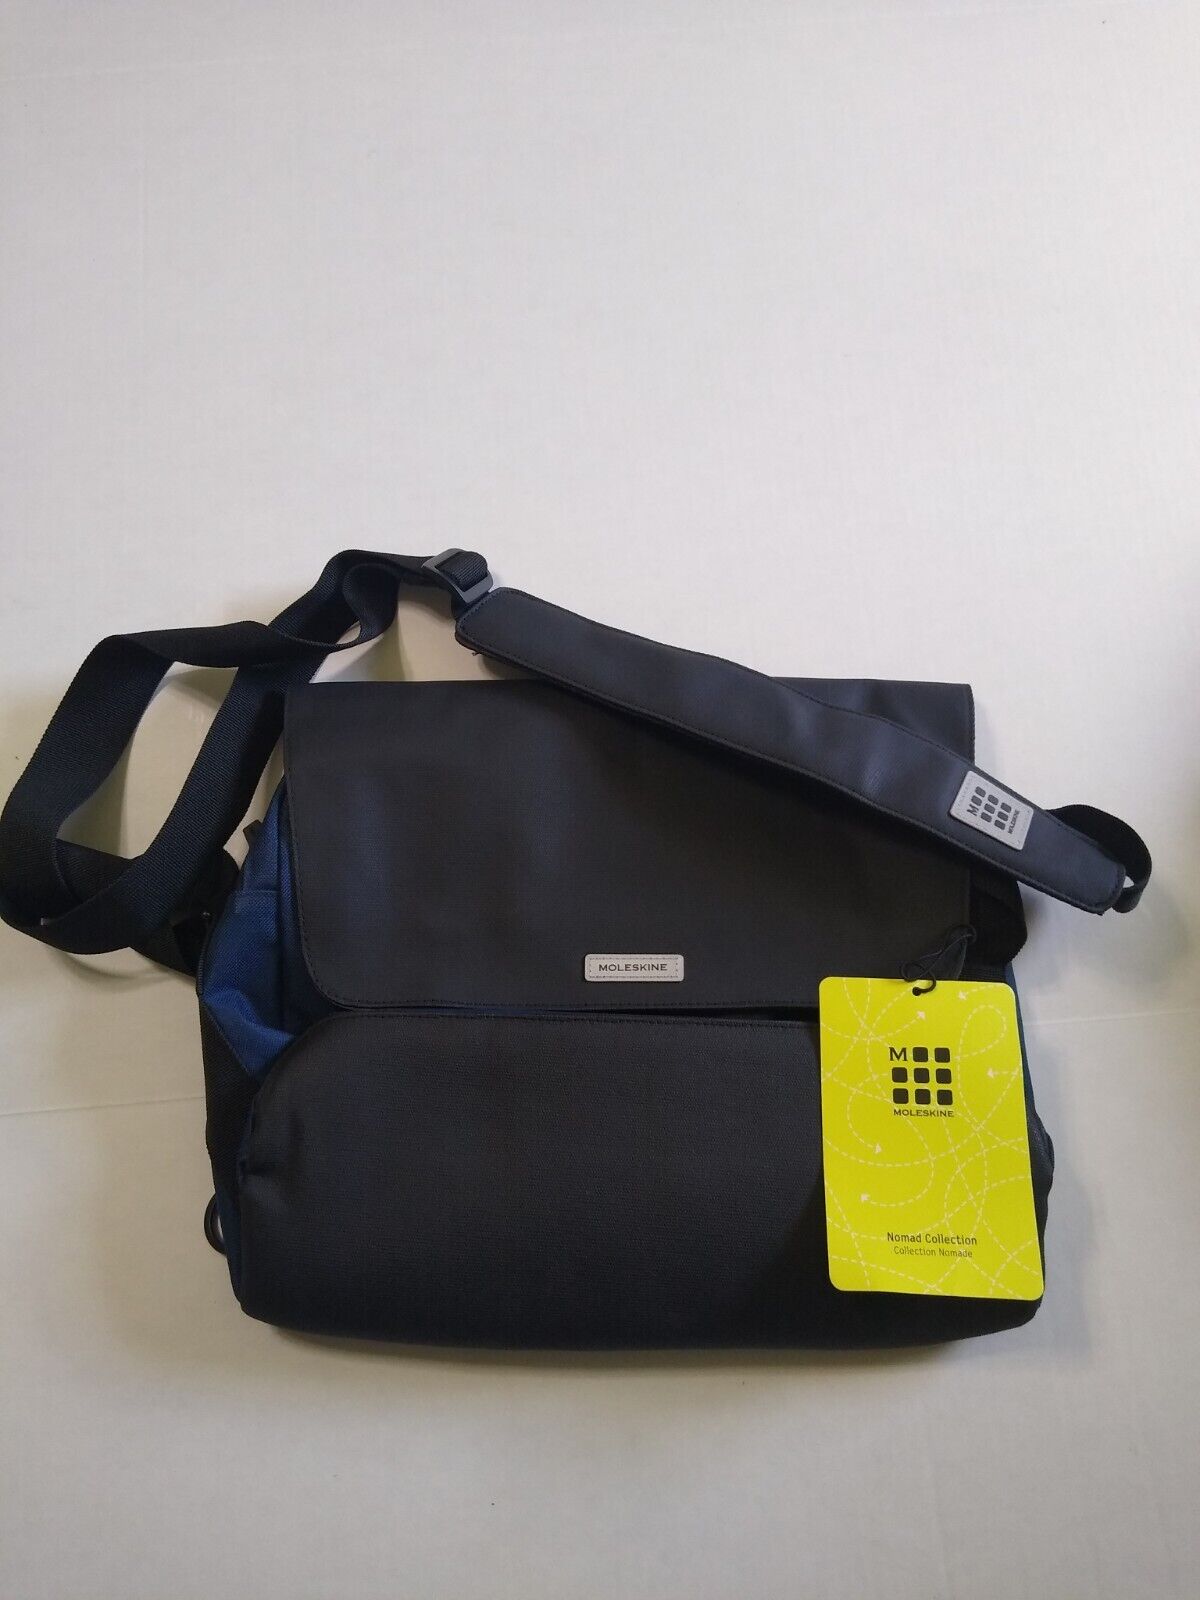 Moleskine Nomad Messenger Laptop Notebook Bag Sapphire Blue Black Italy